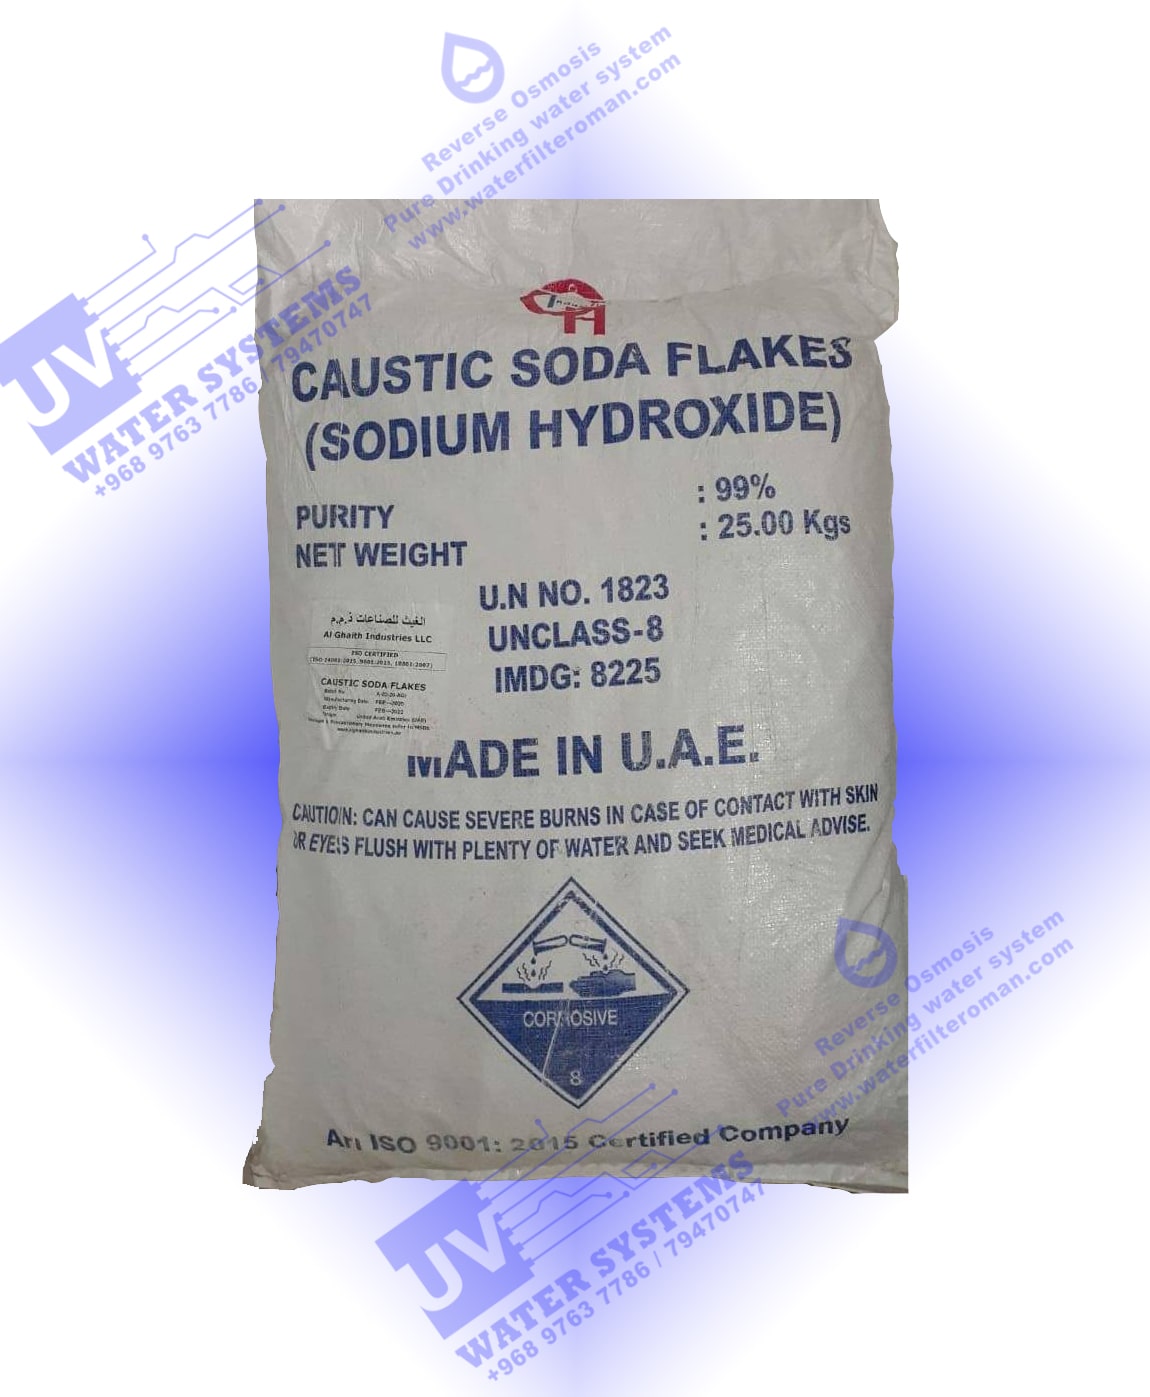 Food grade Sodium Hydroxide Flakesmanufacturers, exporters, and suppliers  in Fujairah, Sharjah Kuwait, Muscat, Dubai UAE.